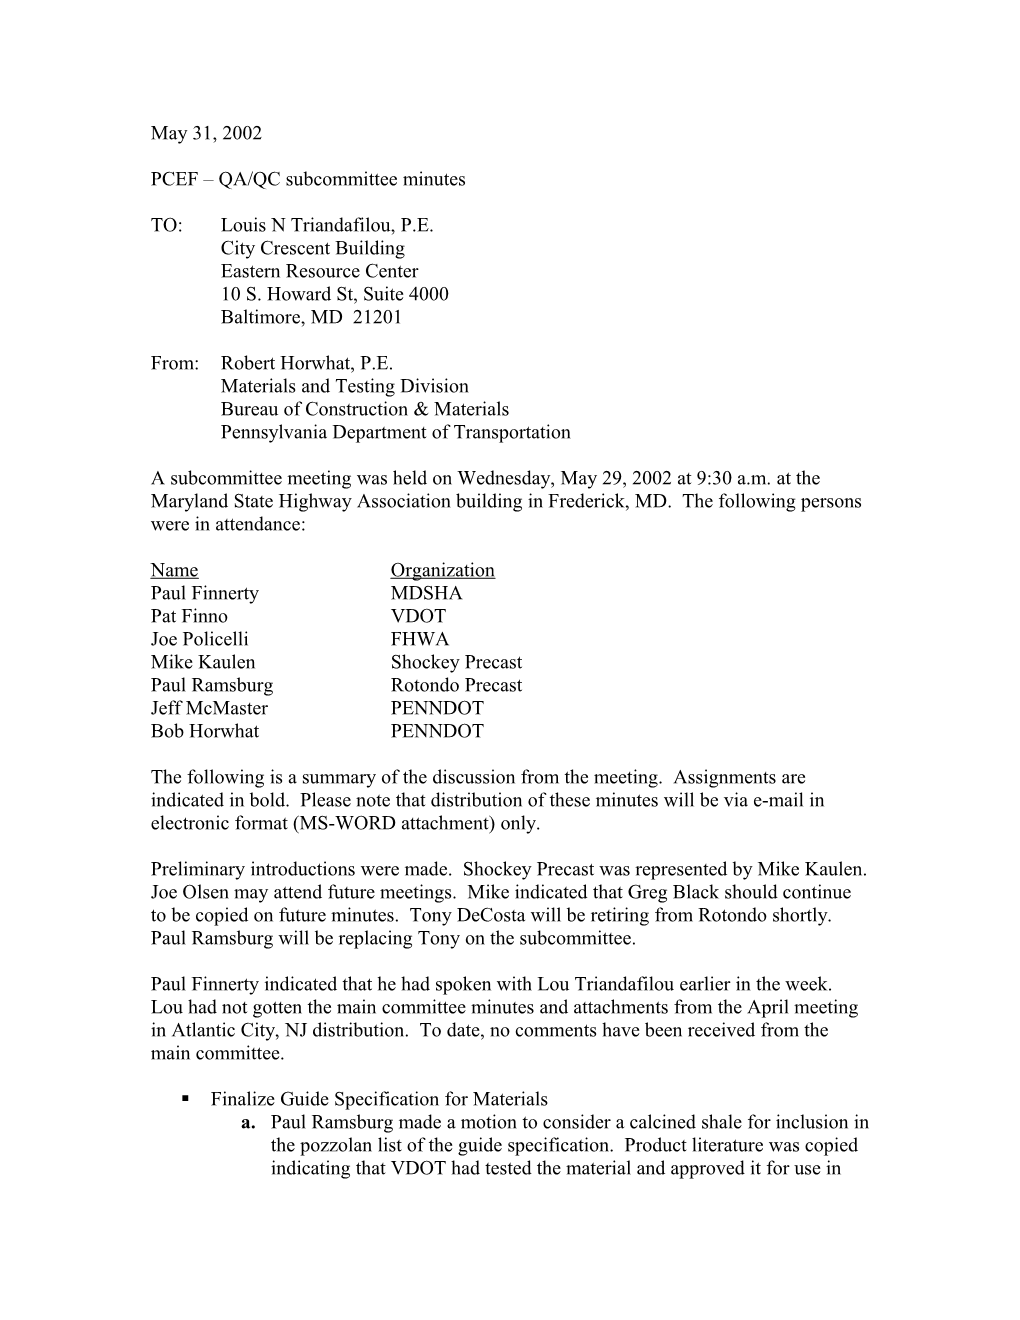 PCEF QA/QC Subcommittee Minutes